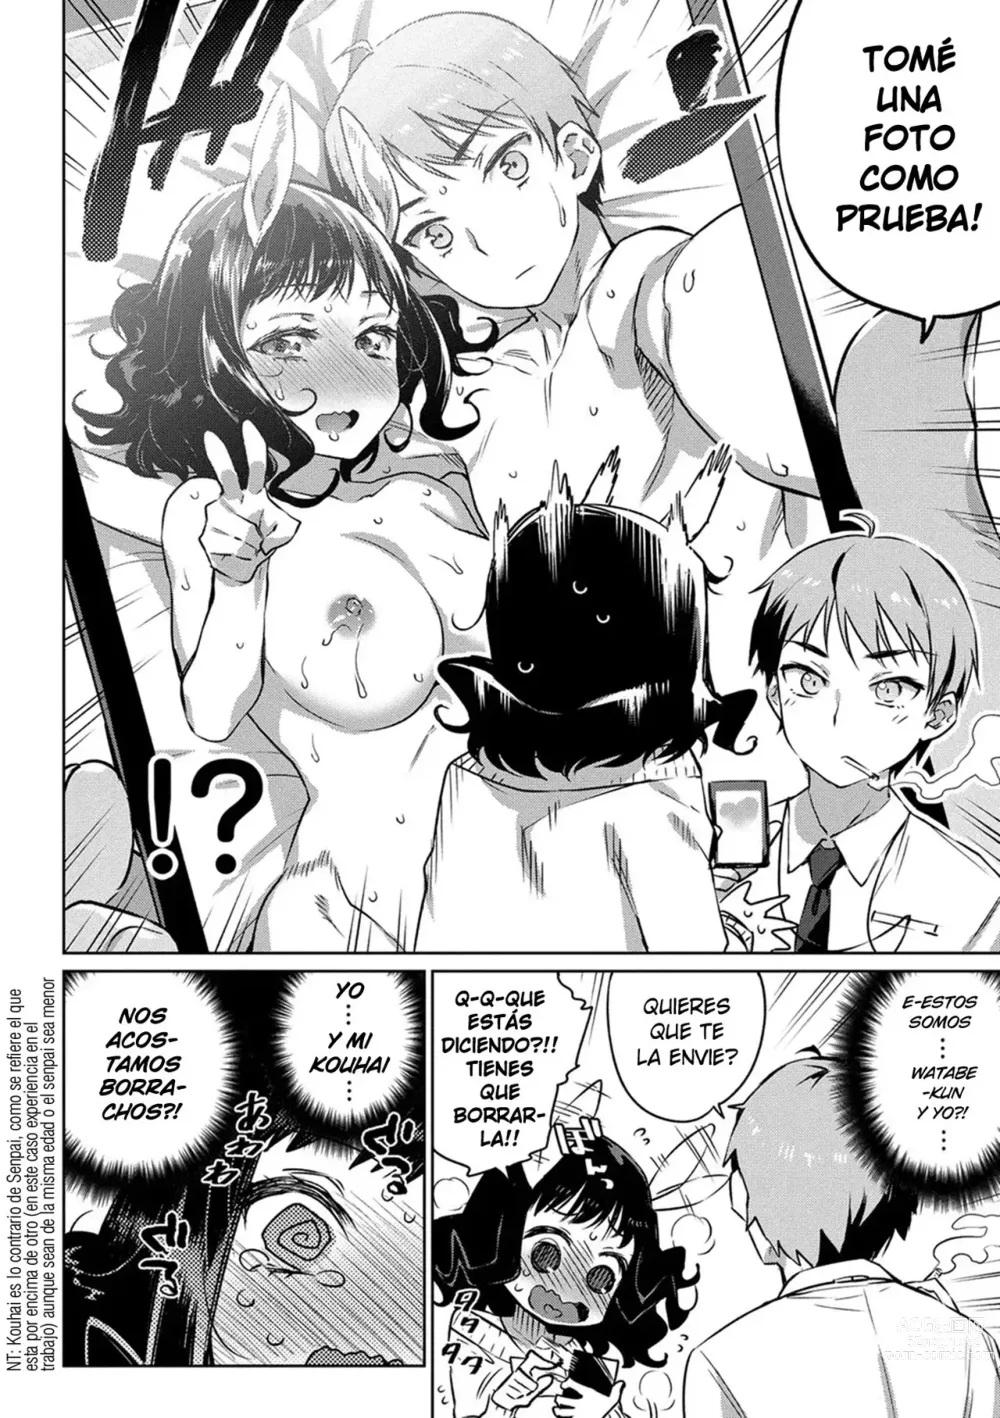 Page 4 of manga La centauro oficinista y su kouhai (decensored)